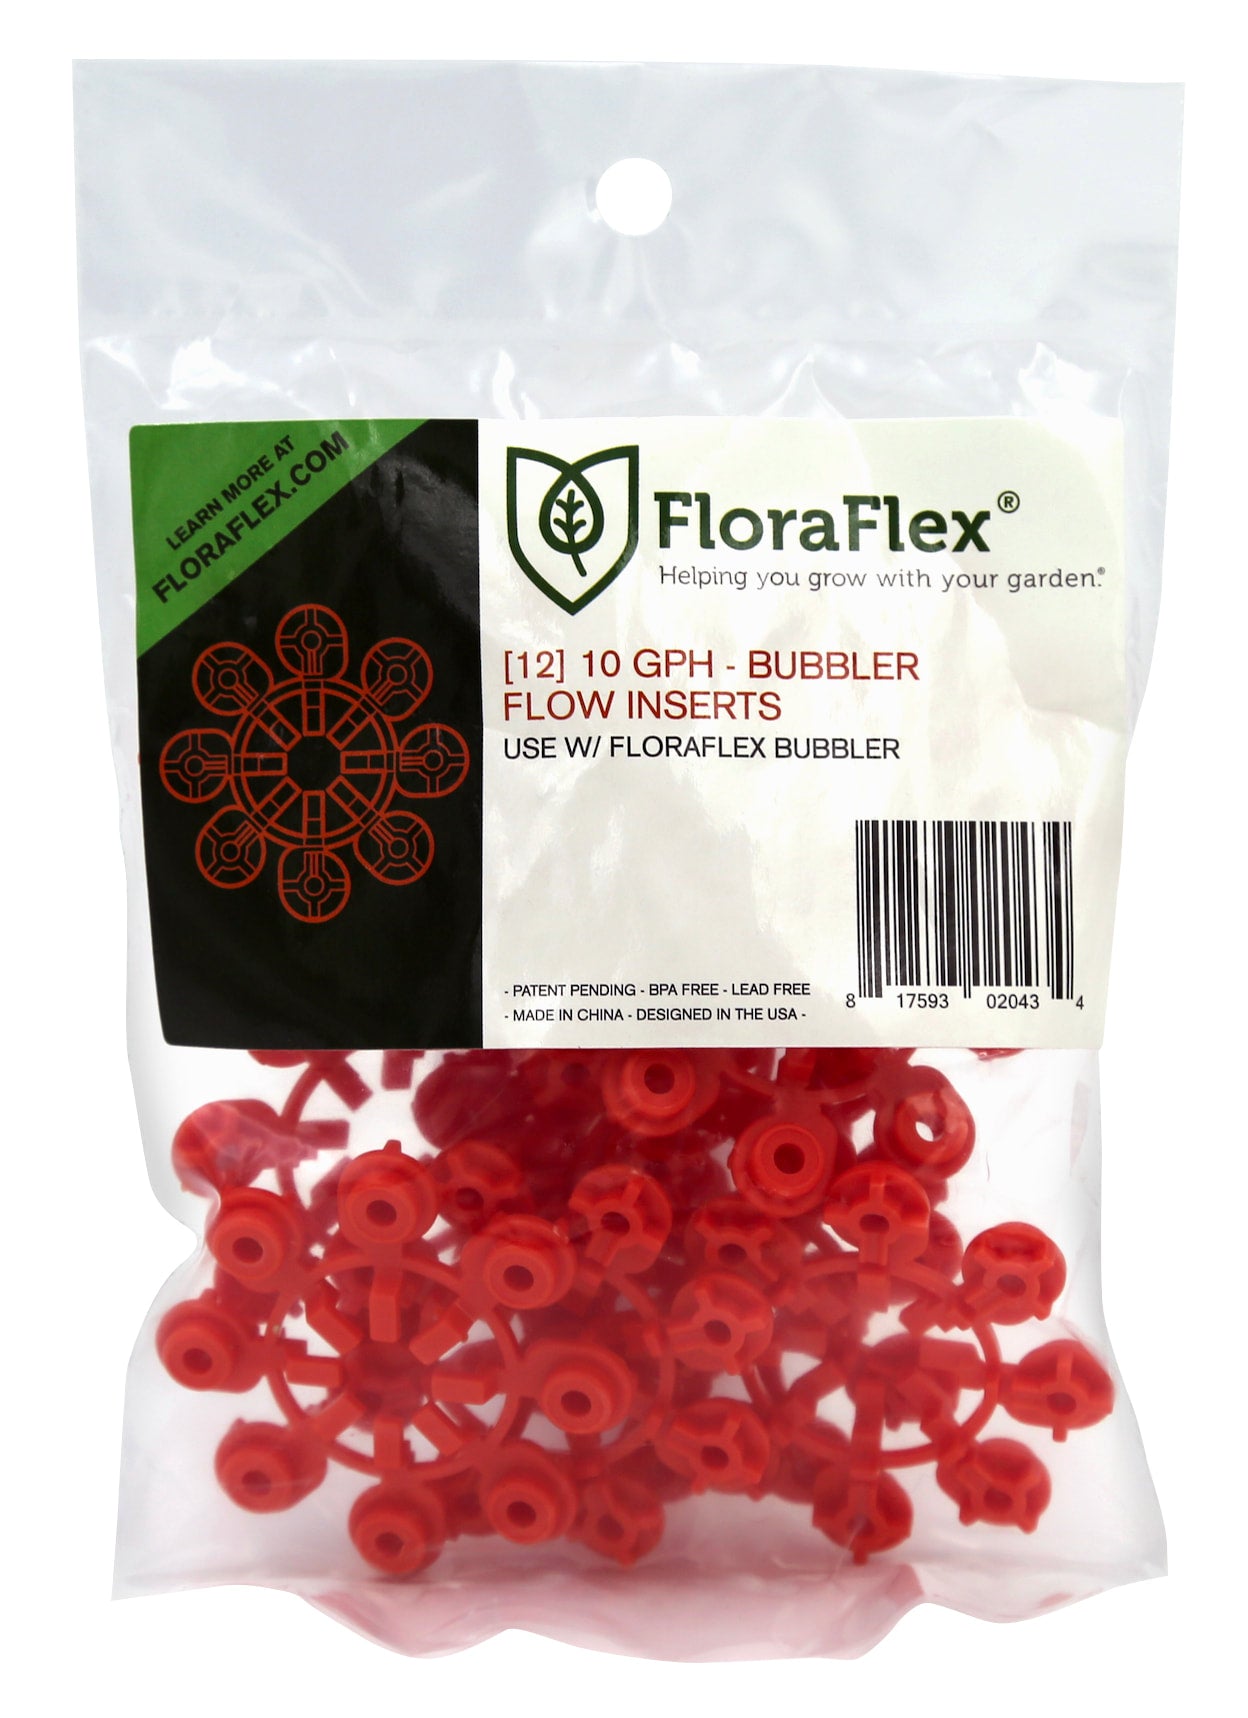 FloraFlex Bubbler Flow Inserts